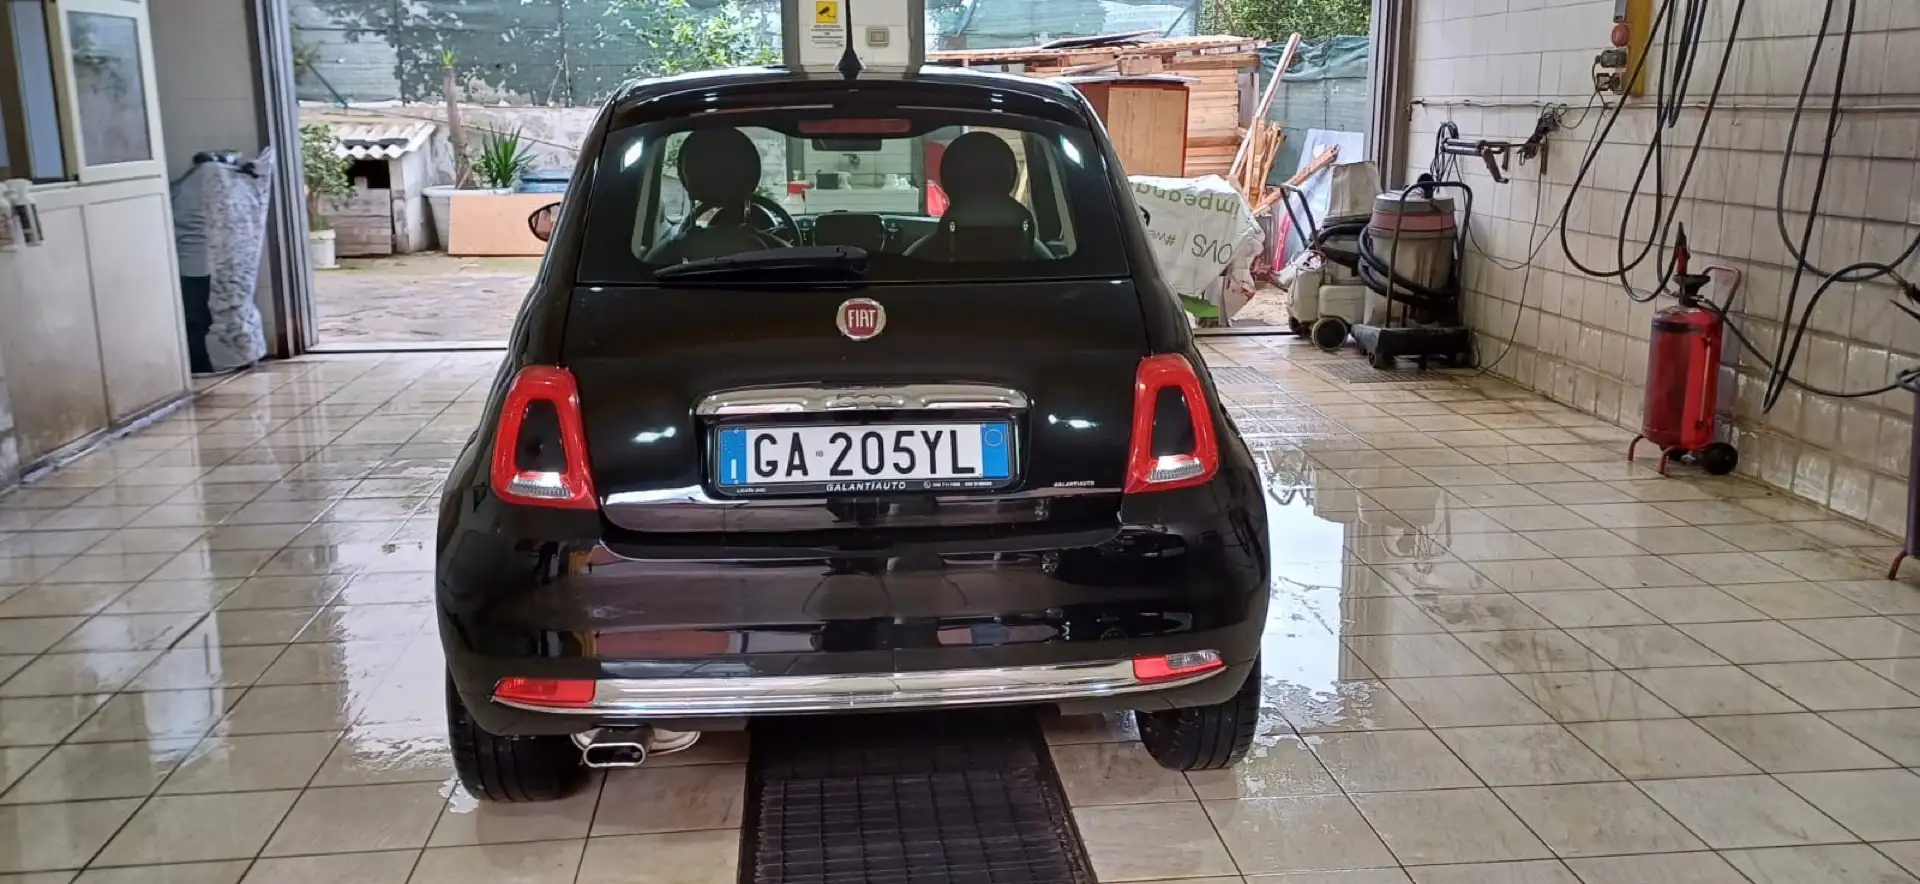 usato Fiat 500 City car a Licata per € 12.000,-